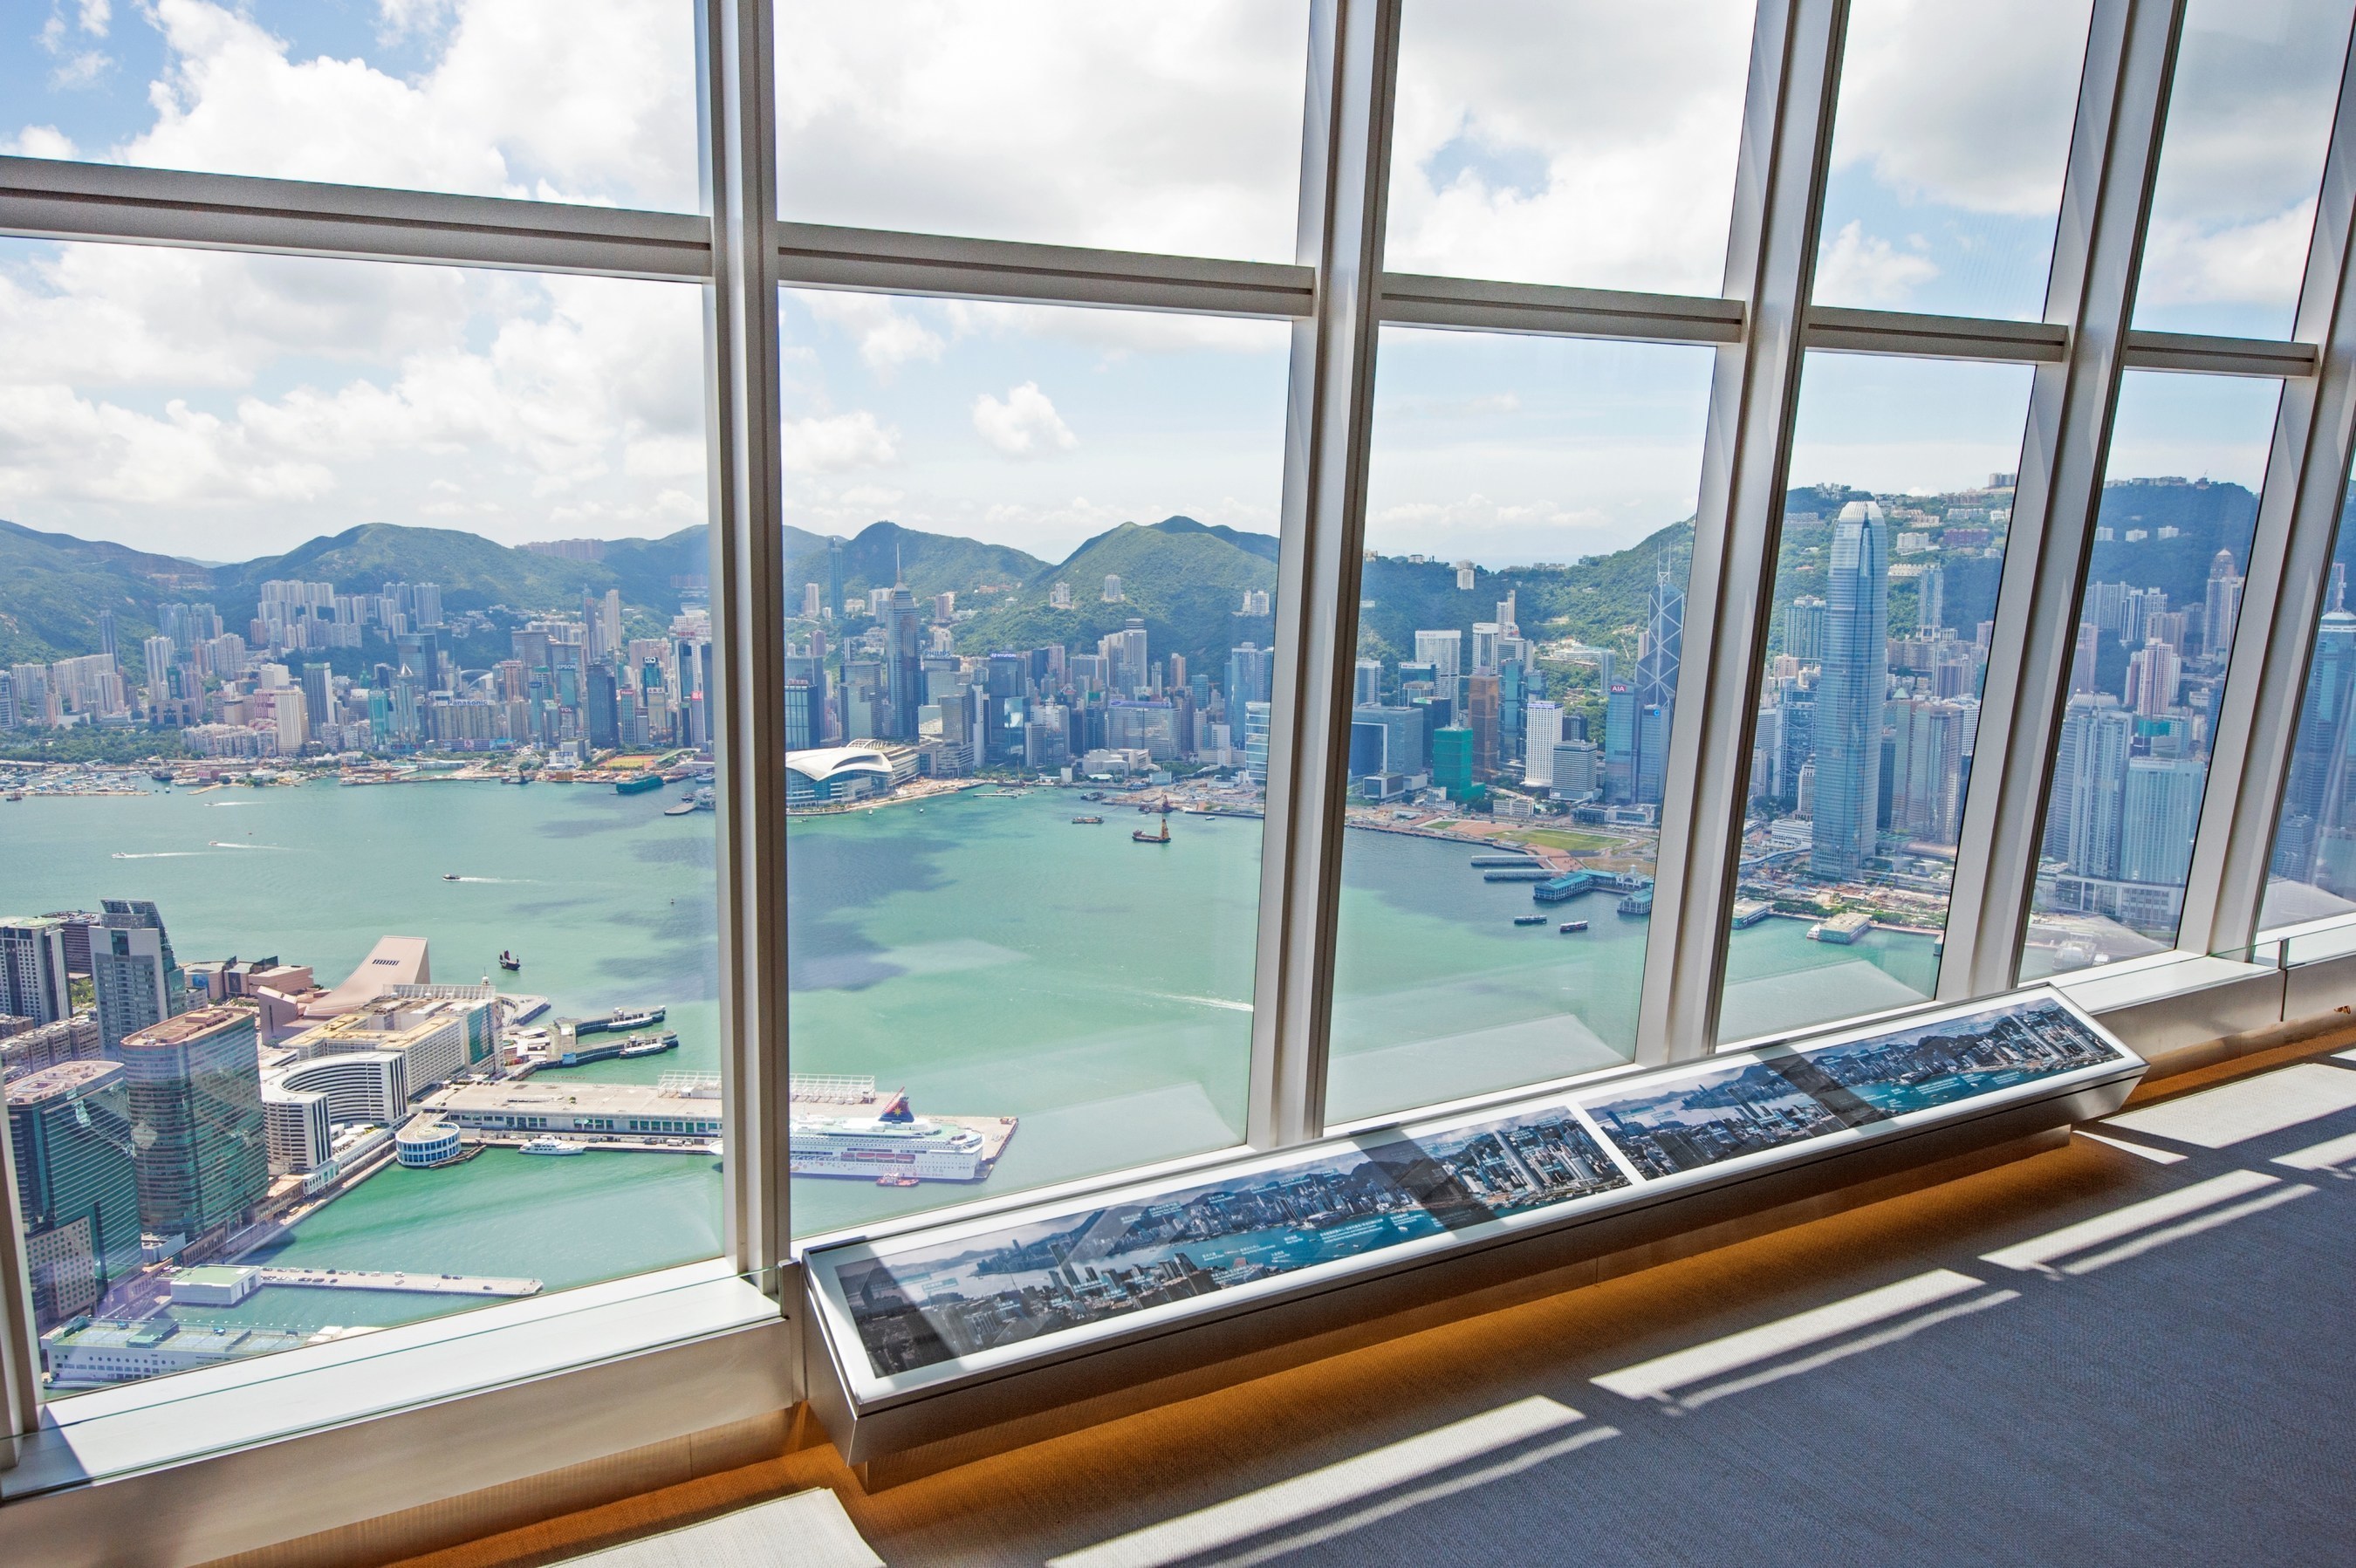 sky100 Hong Kong Observation Deck is Hong Kong's highest and only indoor observation deck.